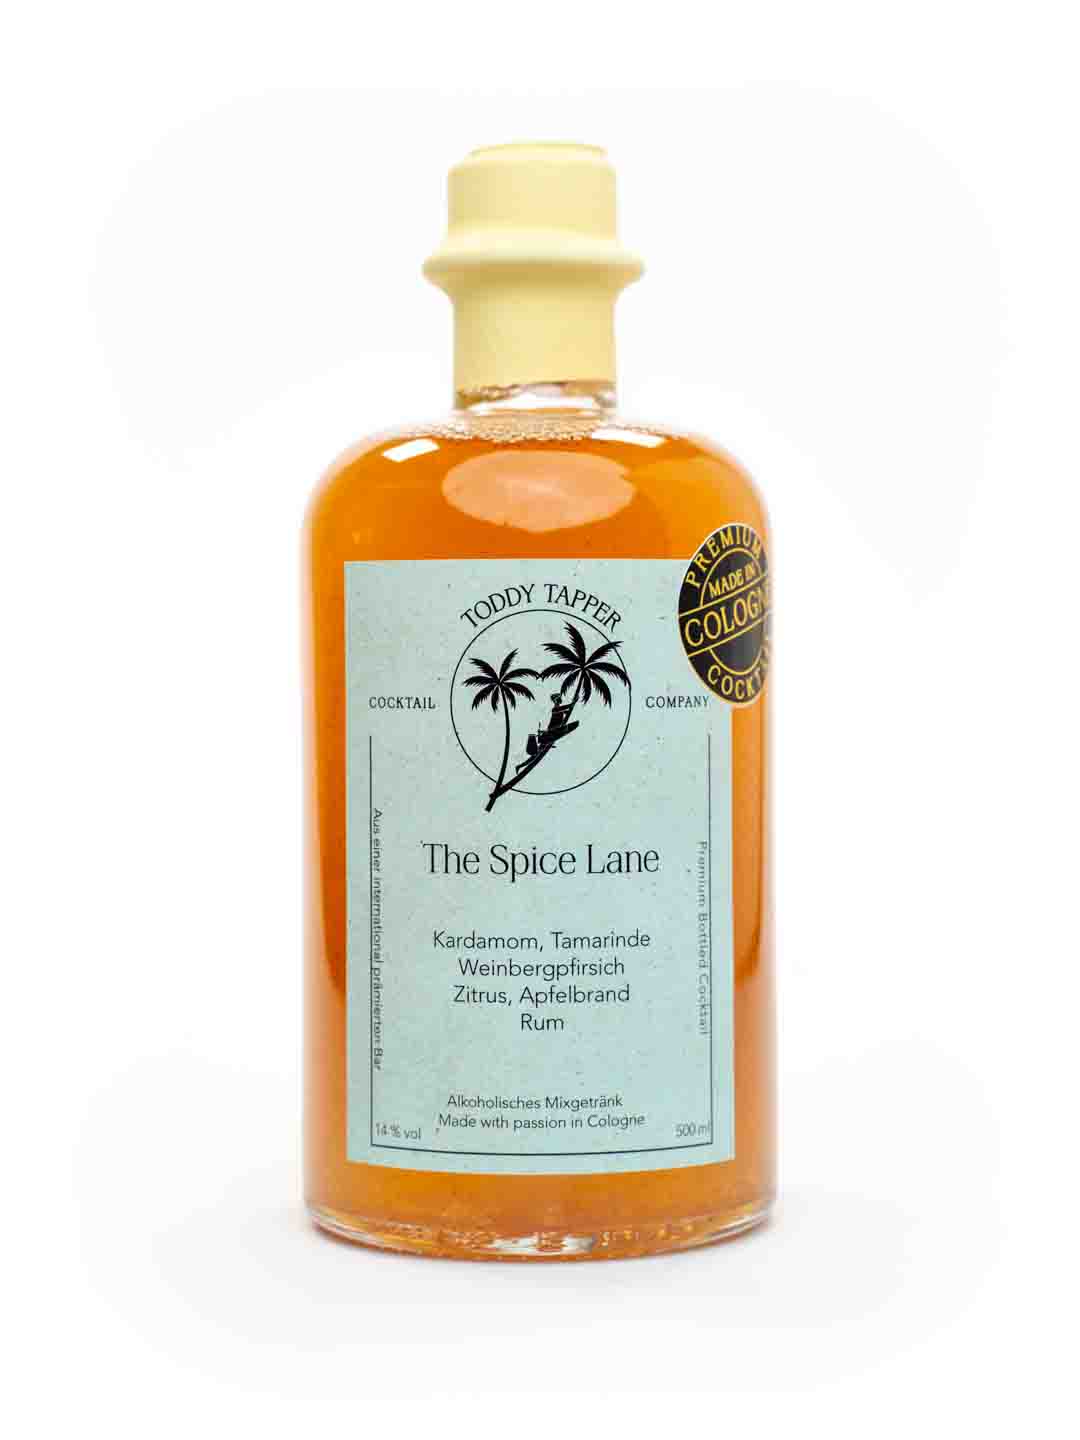 The Spice Lane